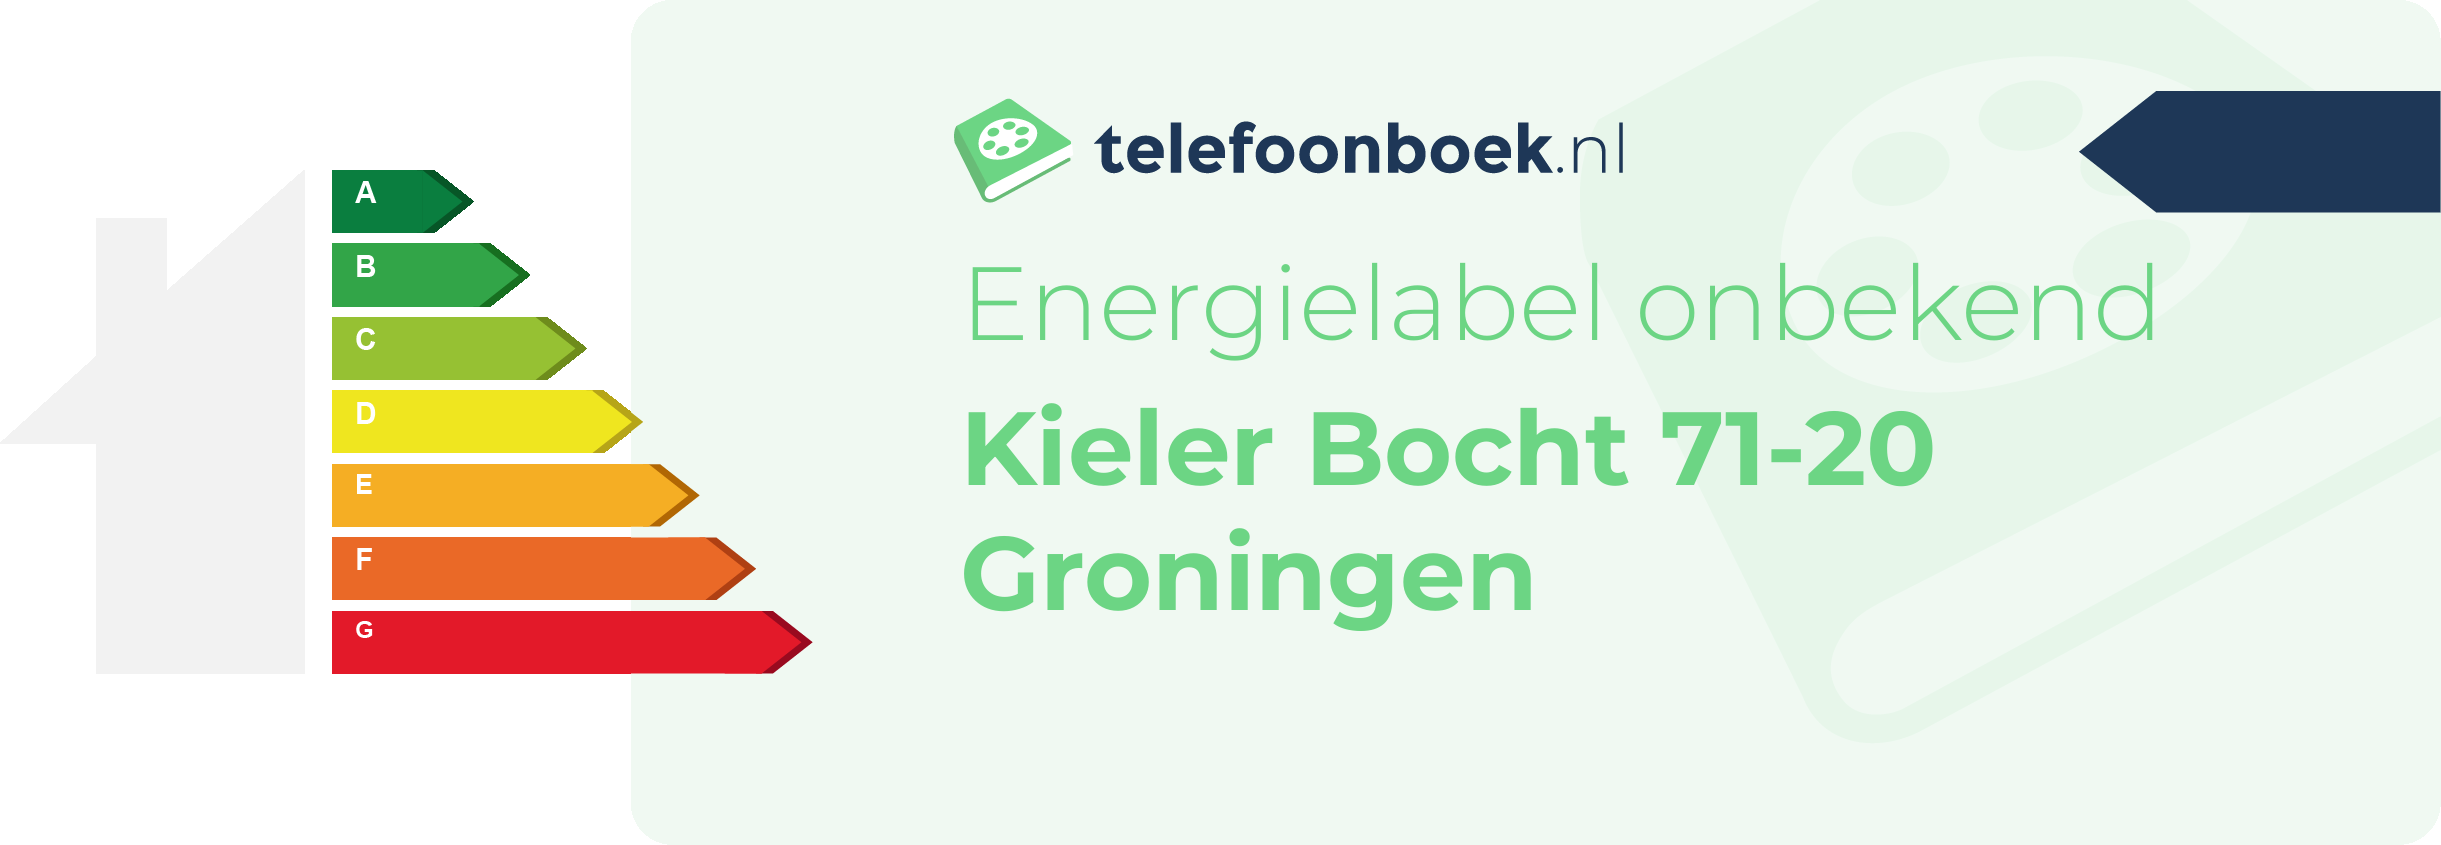 Energielabel Kieler Bocht 71-20 Groningen